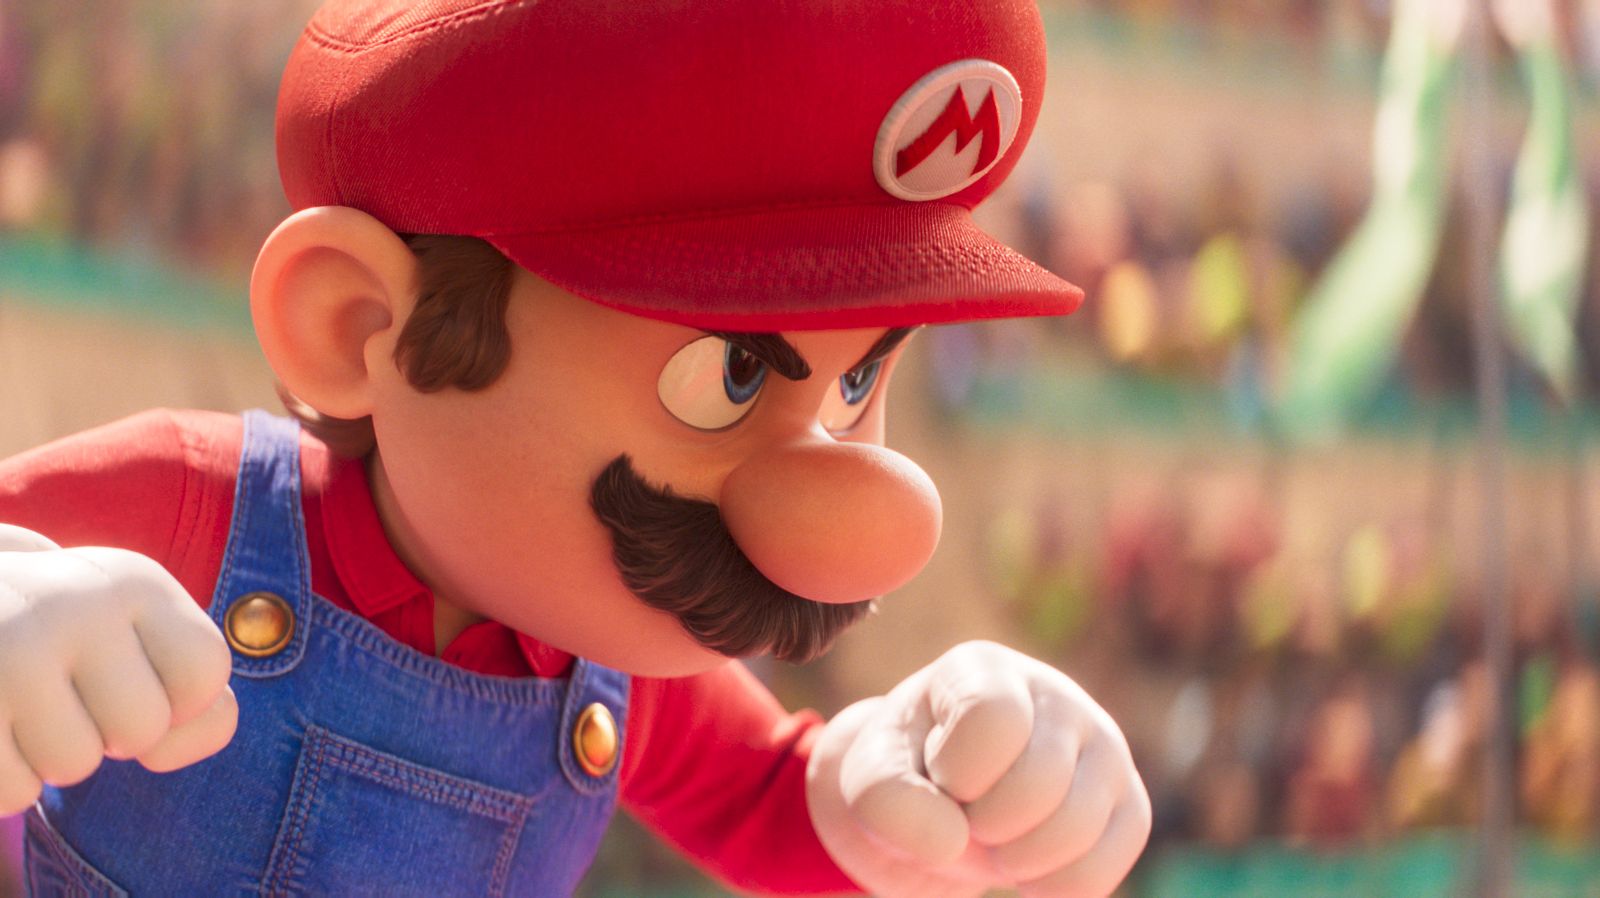 25 Best Mario Games Ever - Top Nintendo Bros. Series Ranked